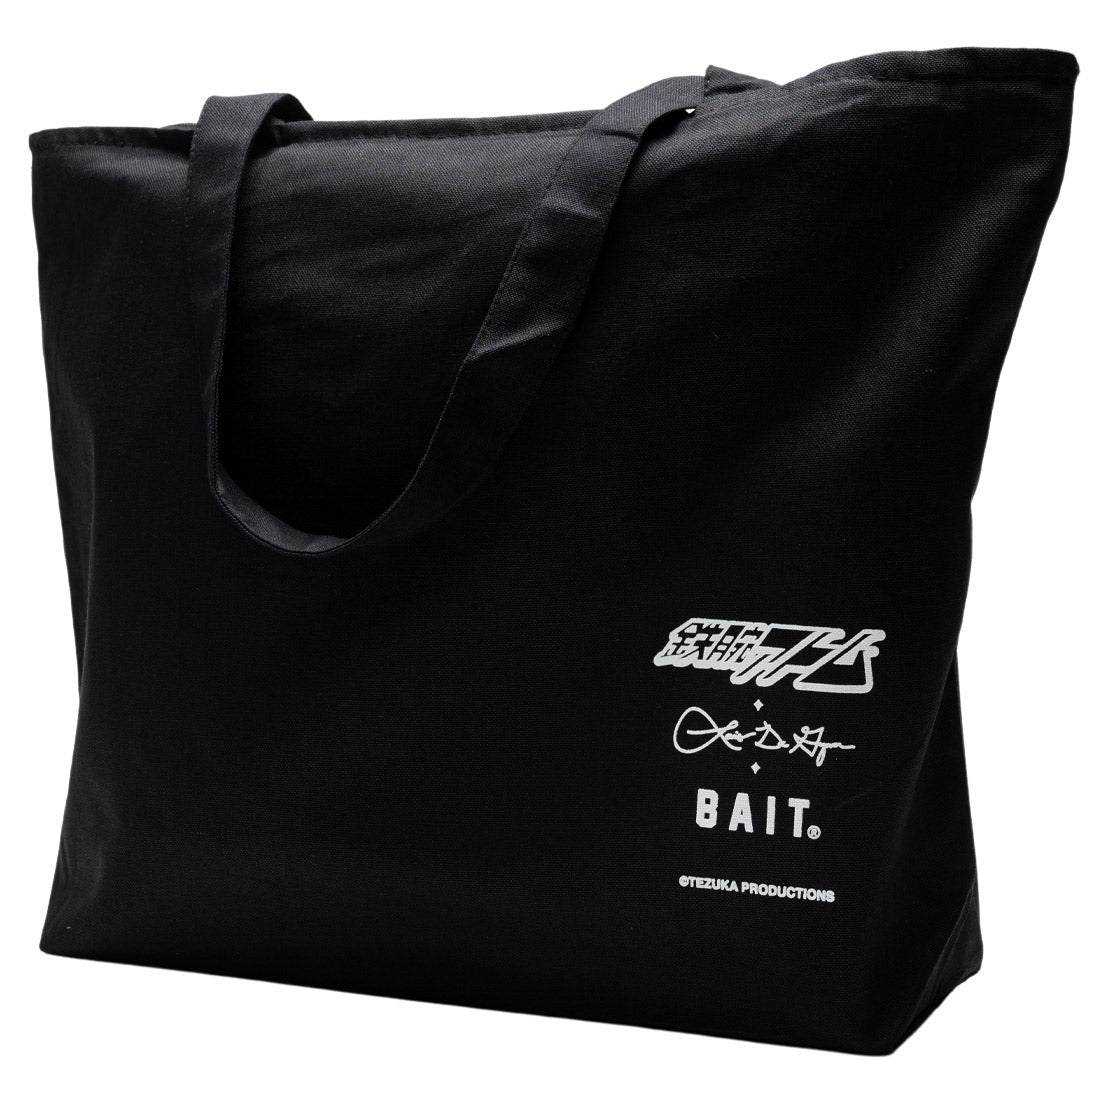 BAIT x Astro Boy x Louis de Guzman Tote Bag (black)